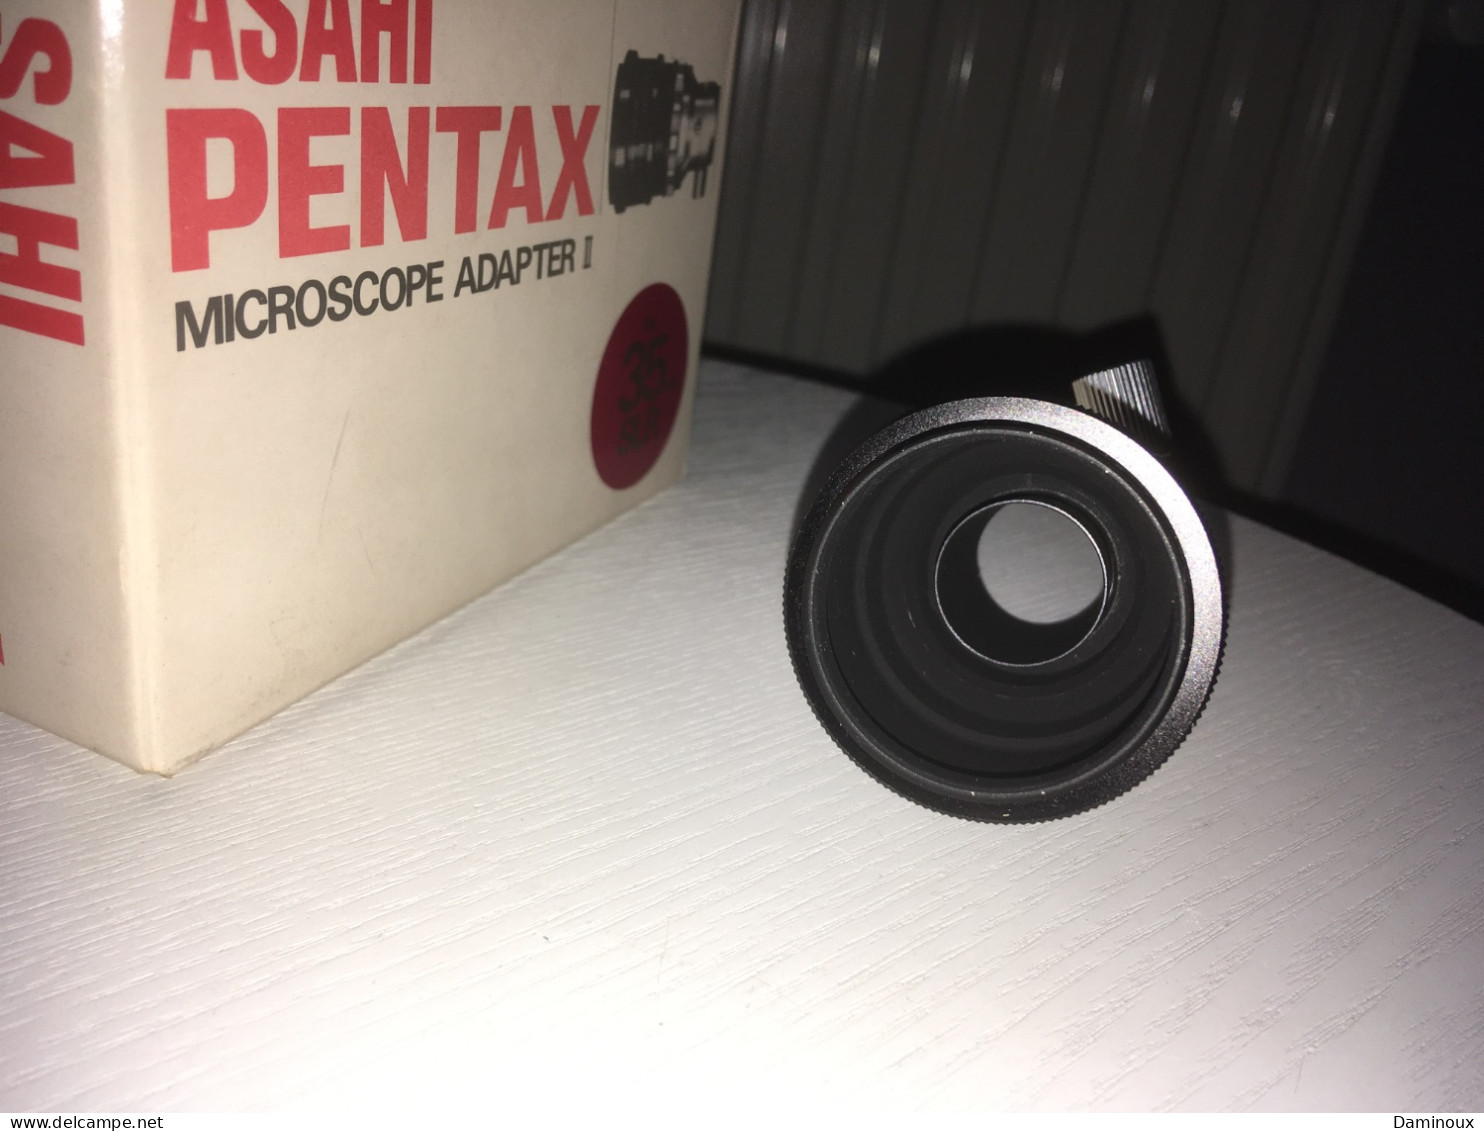 Lot Asahi Pentax: Auto Bellows, Slide Copier, Micriscope Adapter II, Reverse Adapter